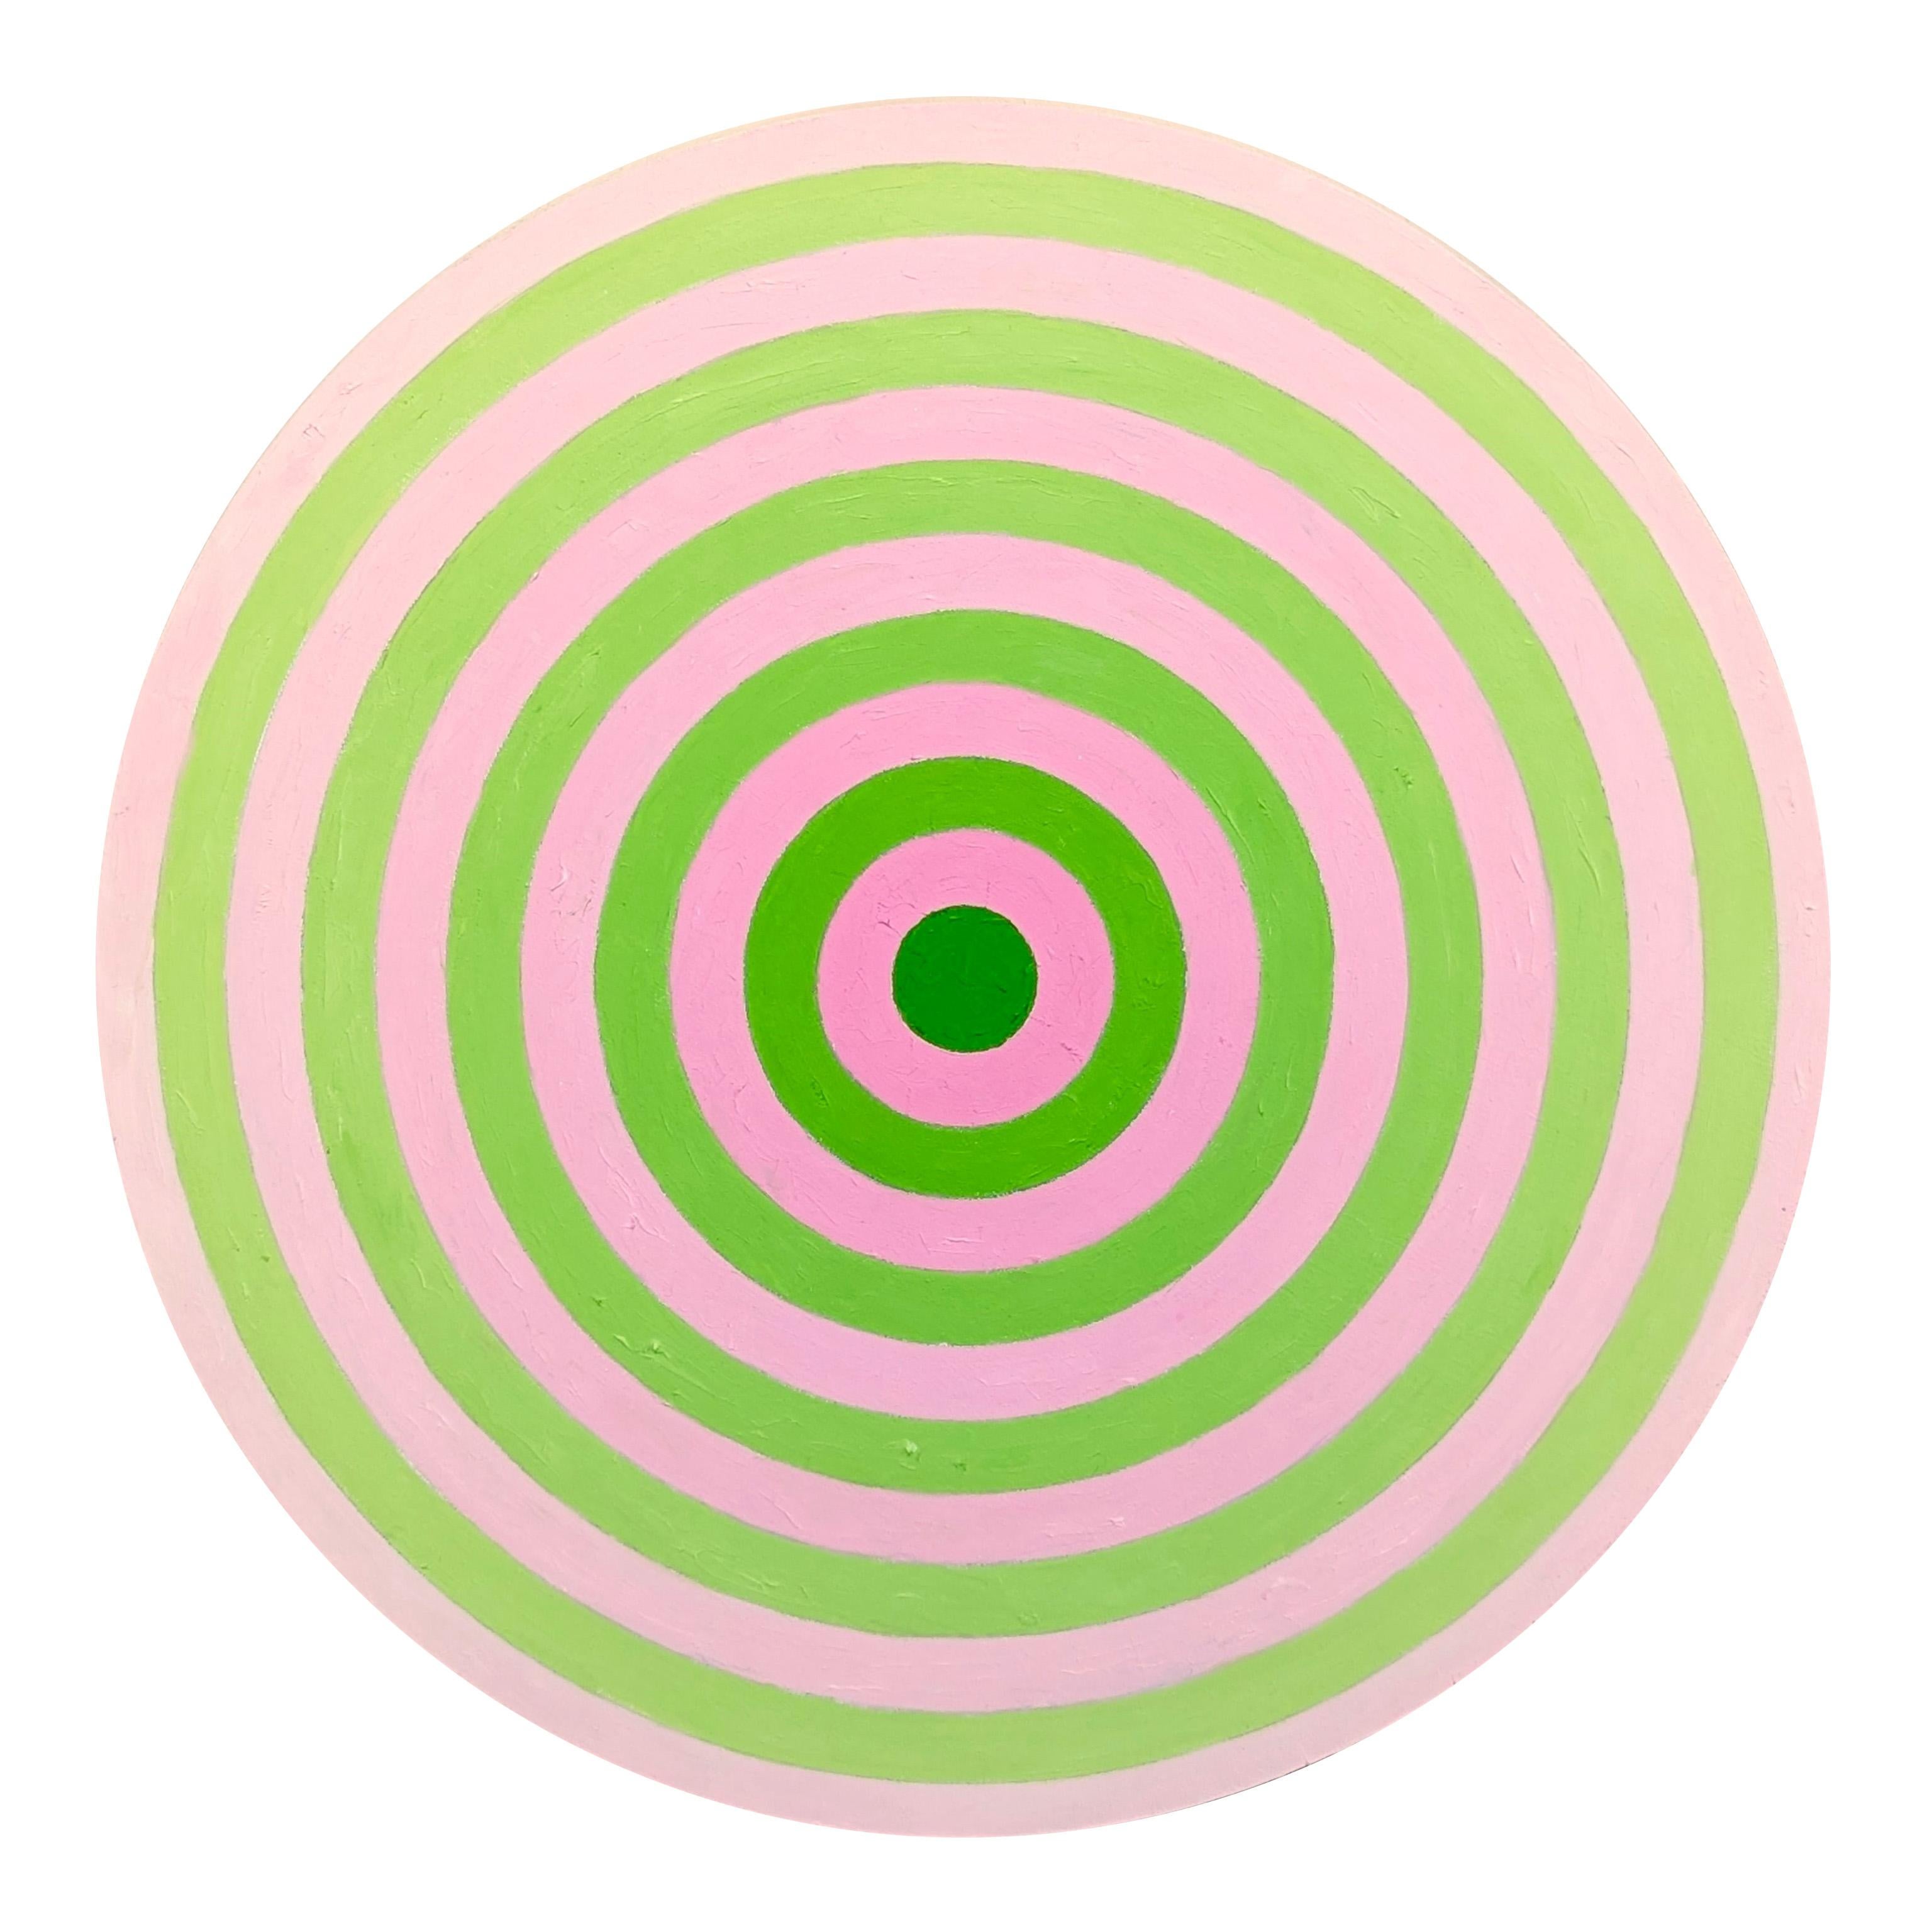 David Hardaker Abstract Painting - "Jerusalem" Contemporary Abstract Pink & Green Concentric Circle Painting